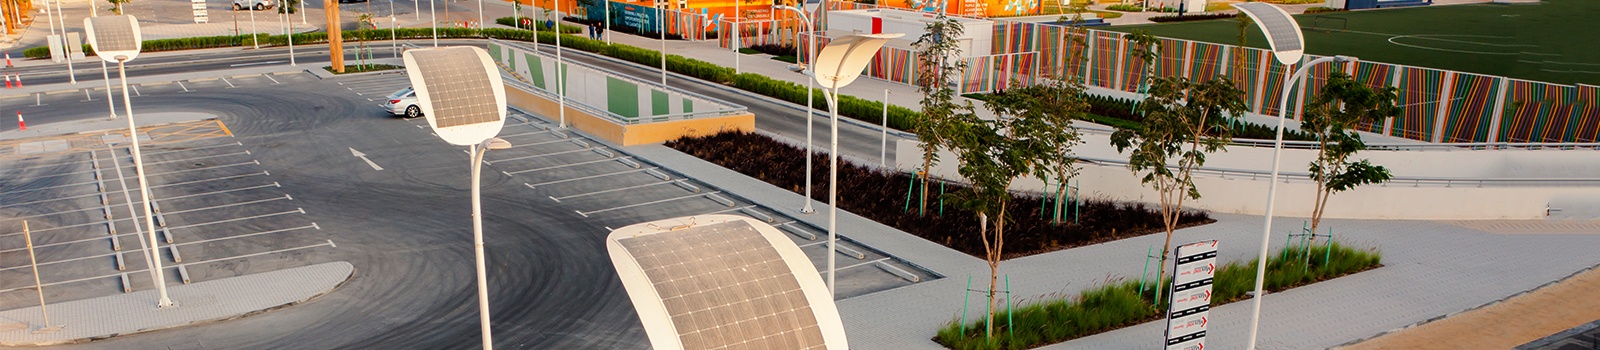 Residential Solar Lighting System Supplier in Florida - Transportation Solutions and Lighting, Inc.